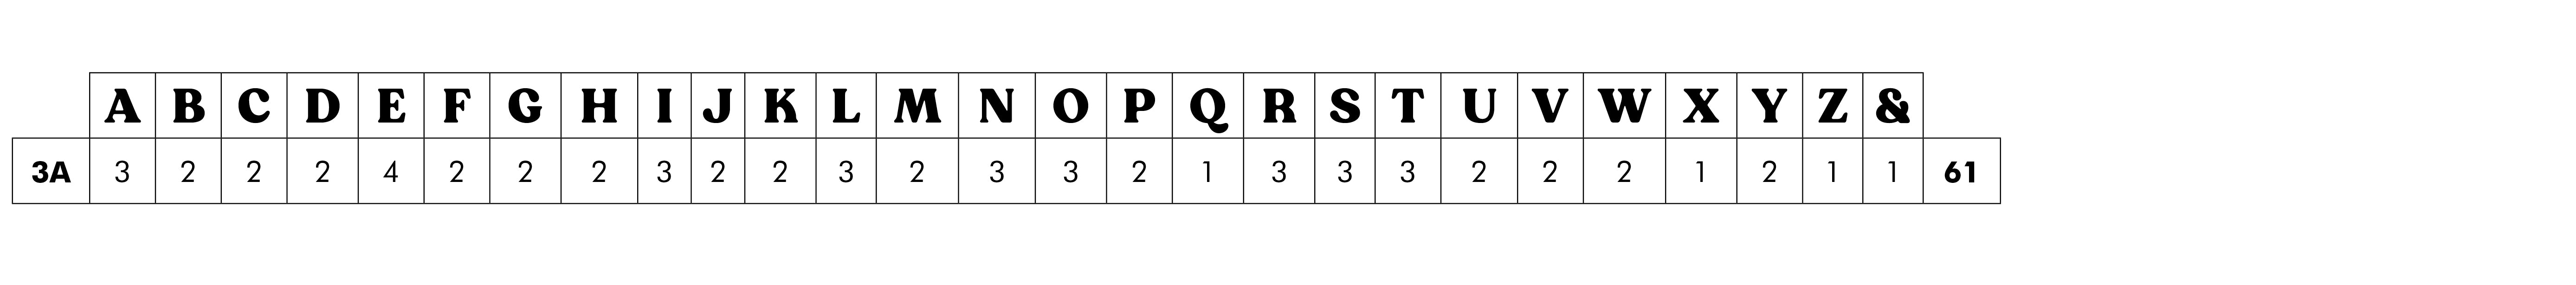 'NT Wagner' letterpress woodtype typeface